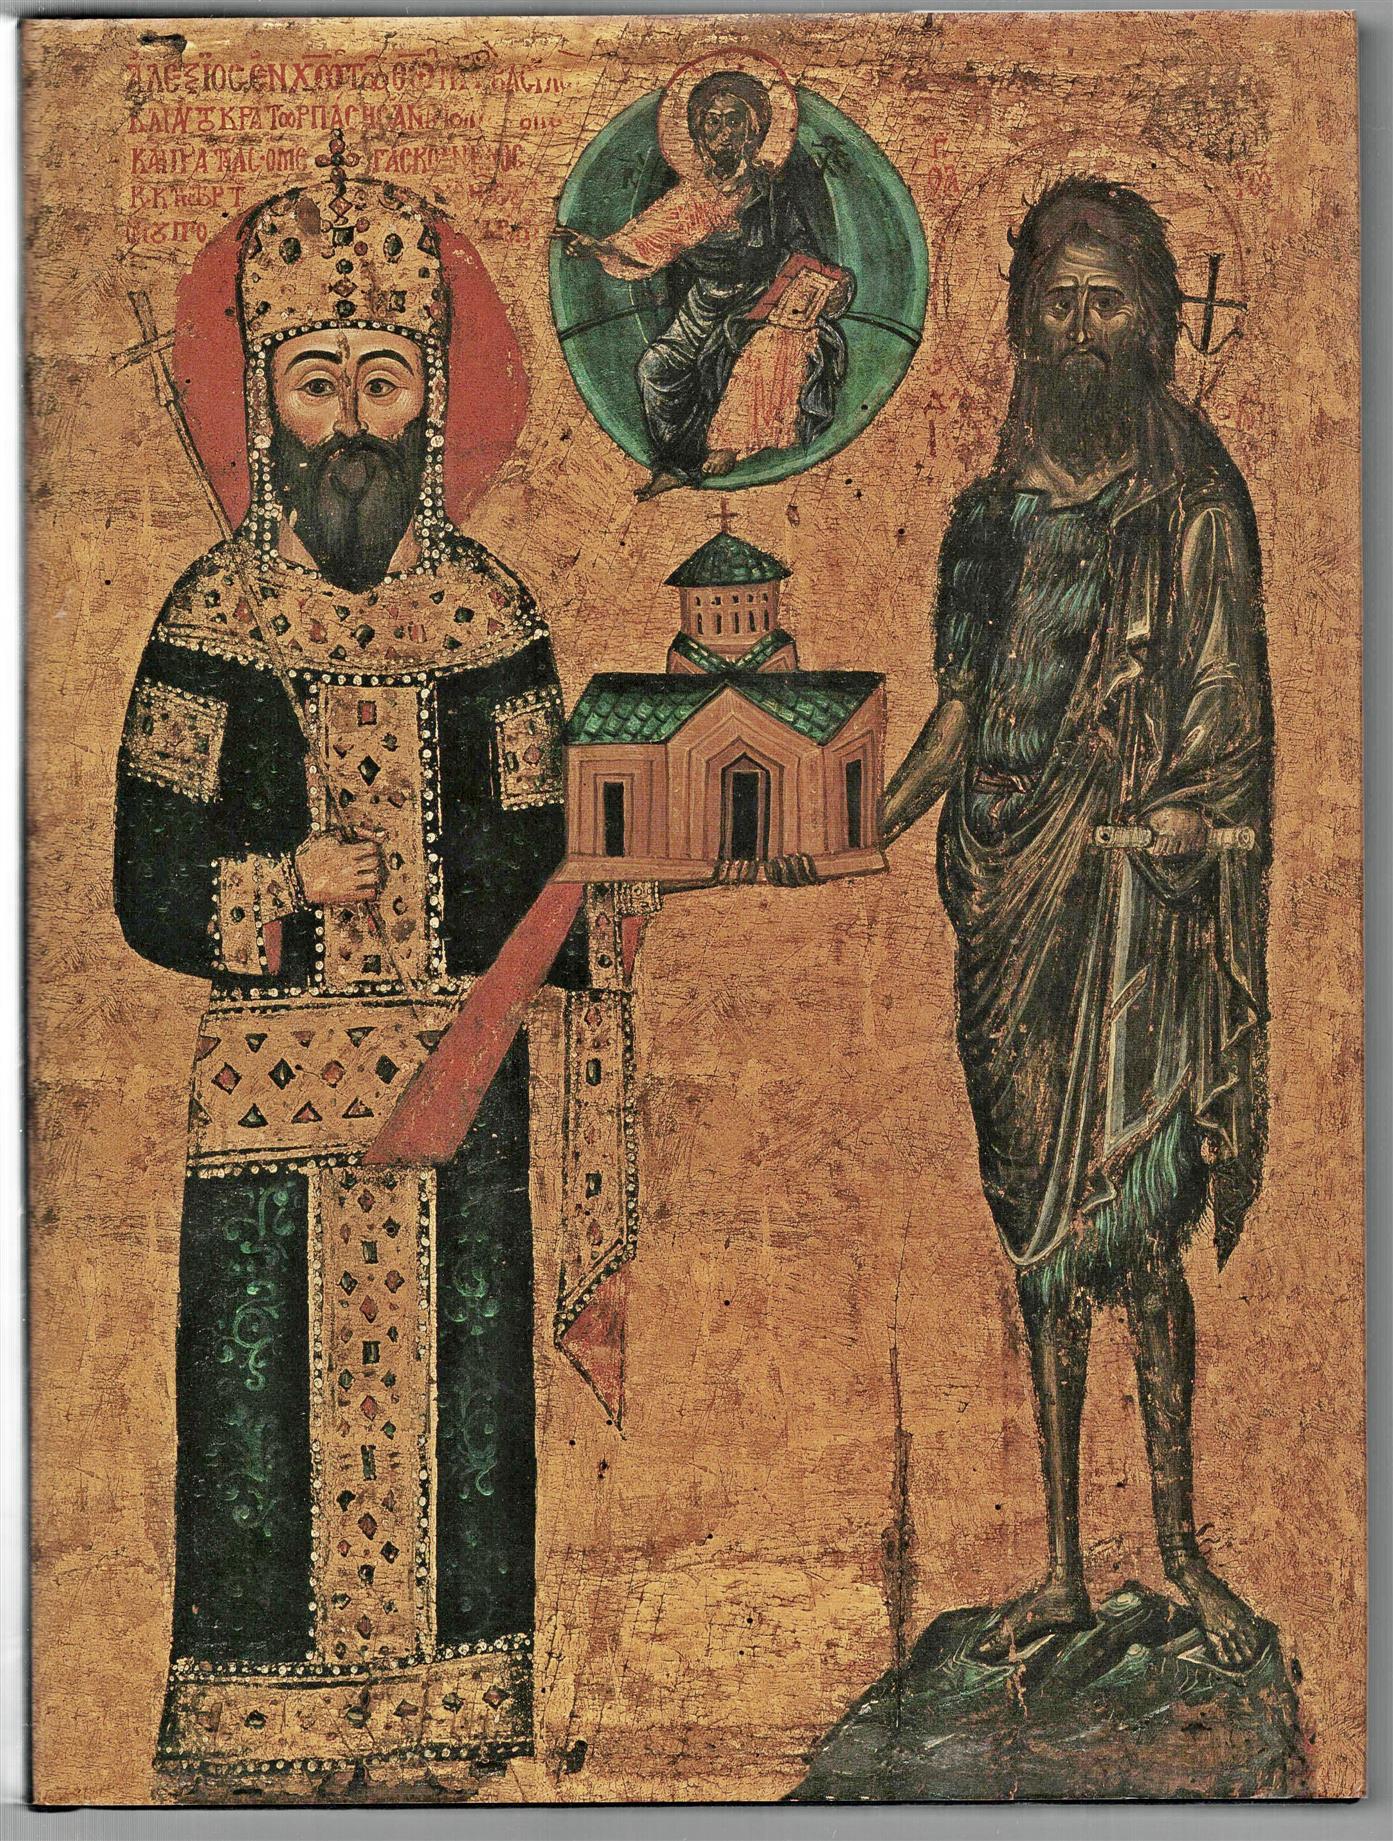 Karakatsanis, Athanasios A., Atsalos, Basil, Hendry, Andrew, Museum of Byzantine Culture (Thessaloniki) - Treasures of Mount Athos